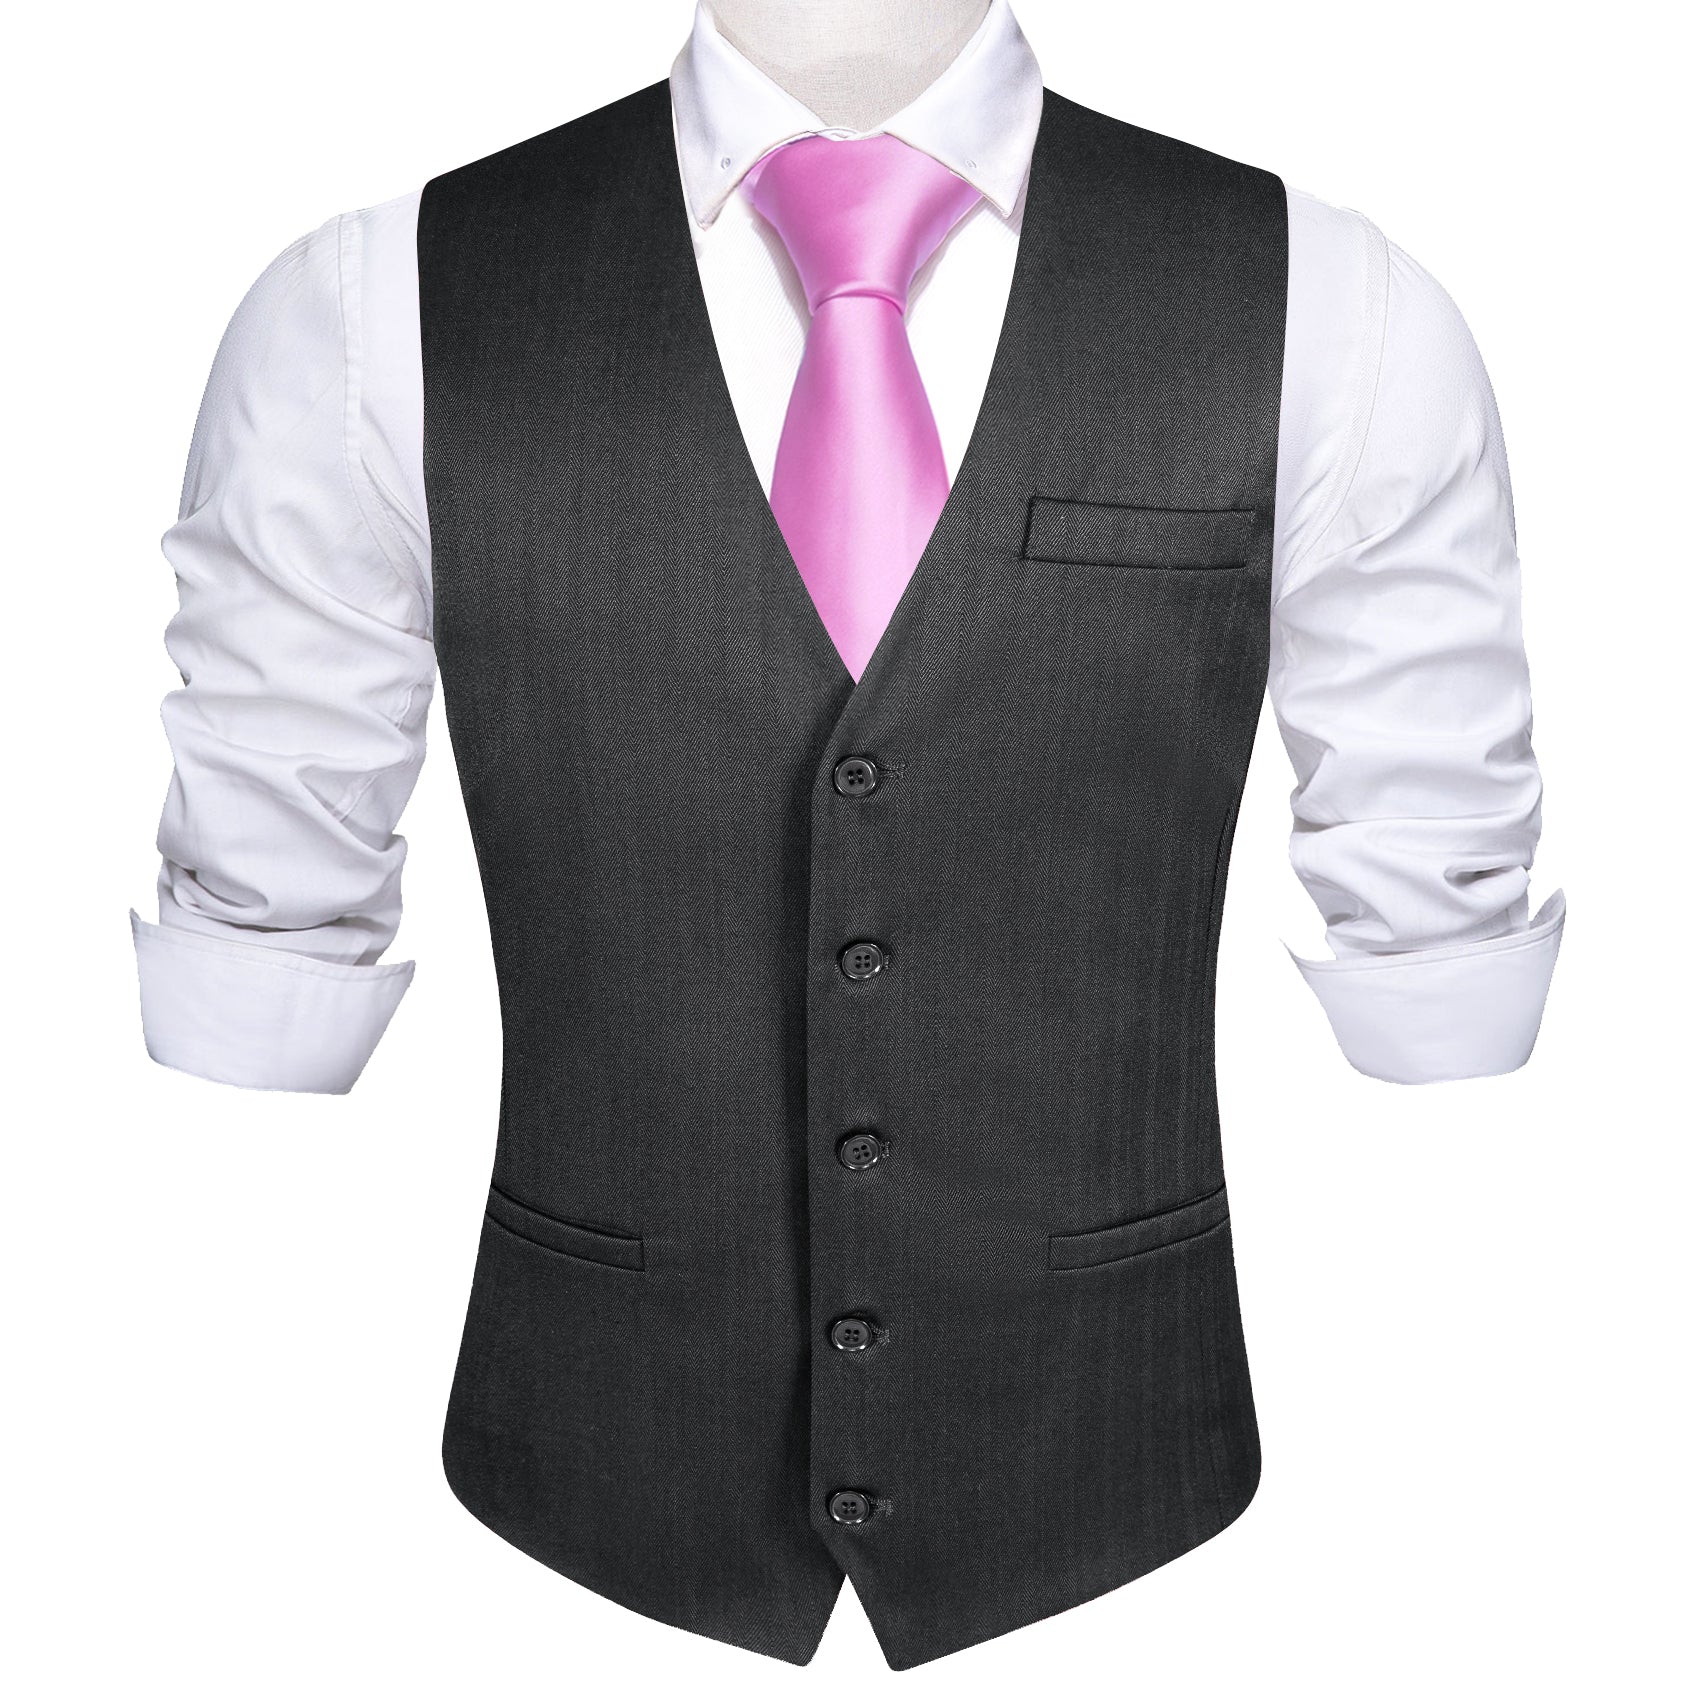 Barry.wang Men's Work Vest Classy Black Solid Vest Waistcoat Suit